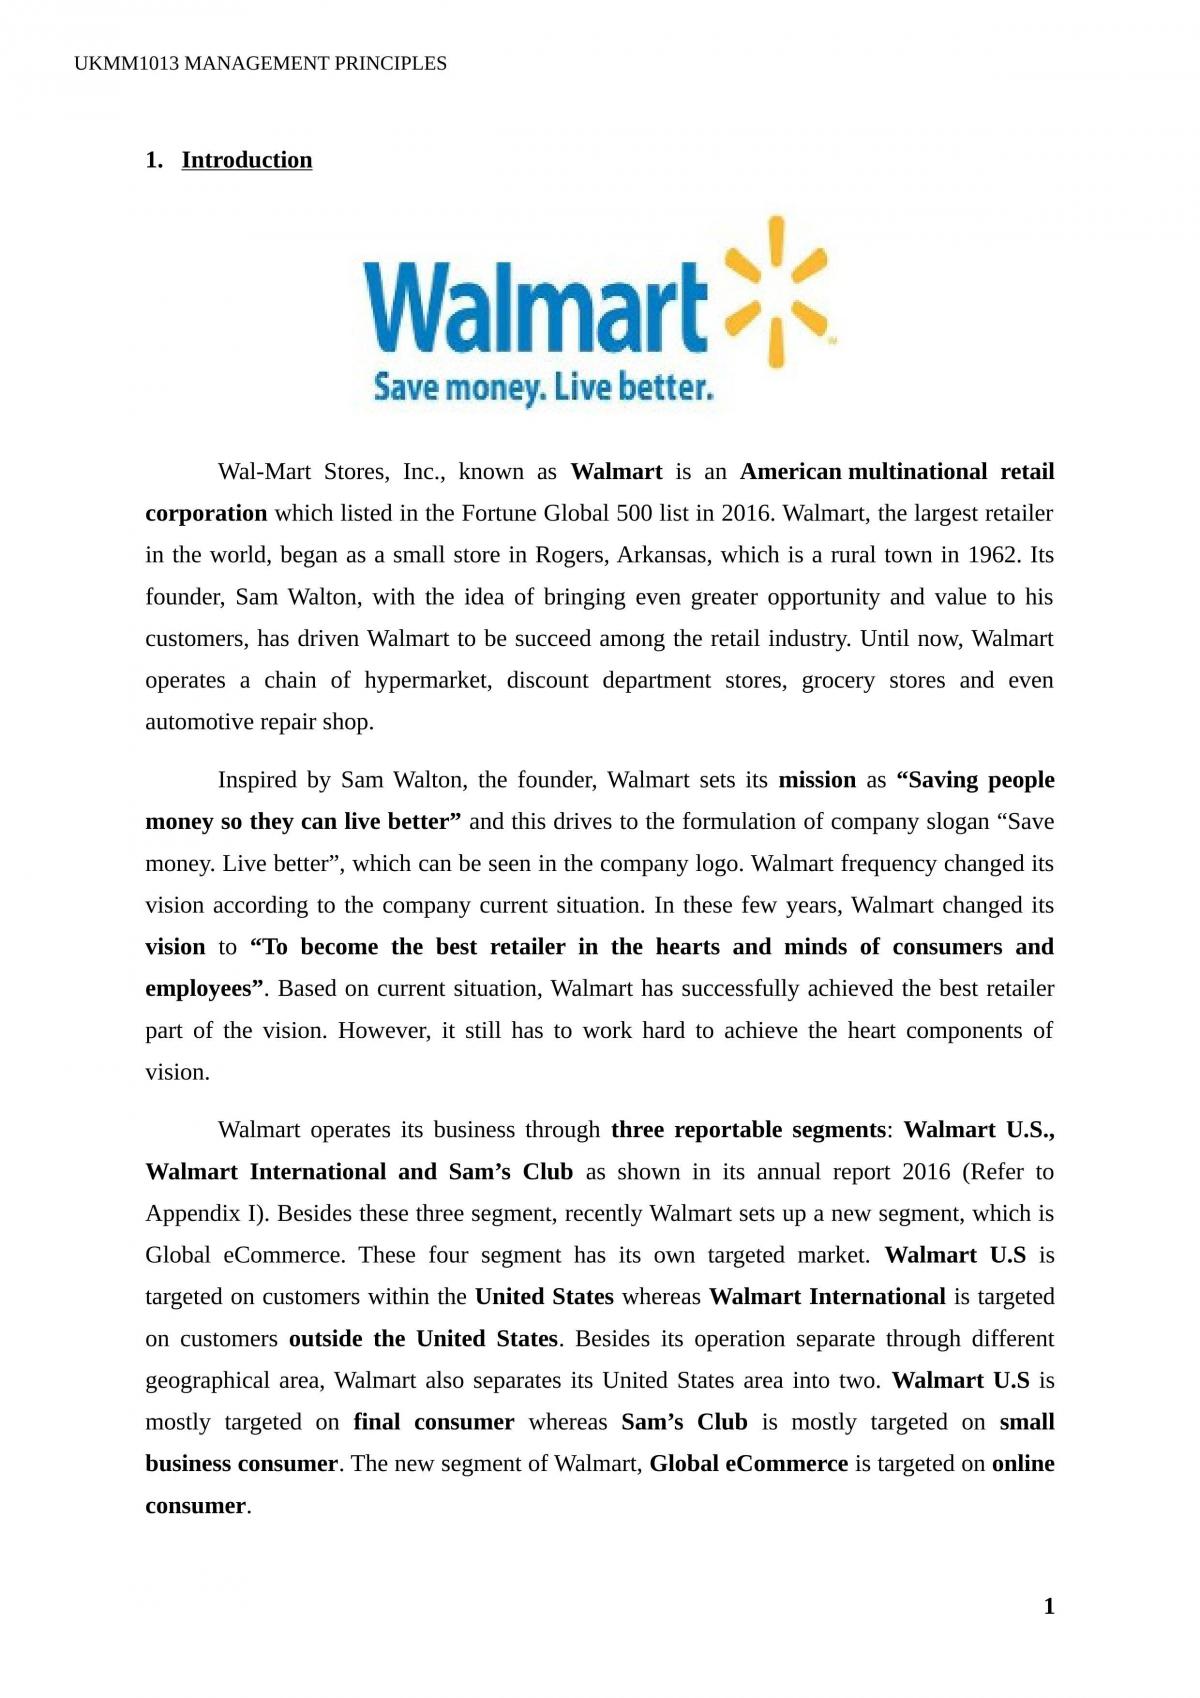 Management Principles Assignment - Walmart  - Page 1